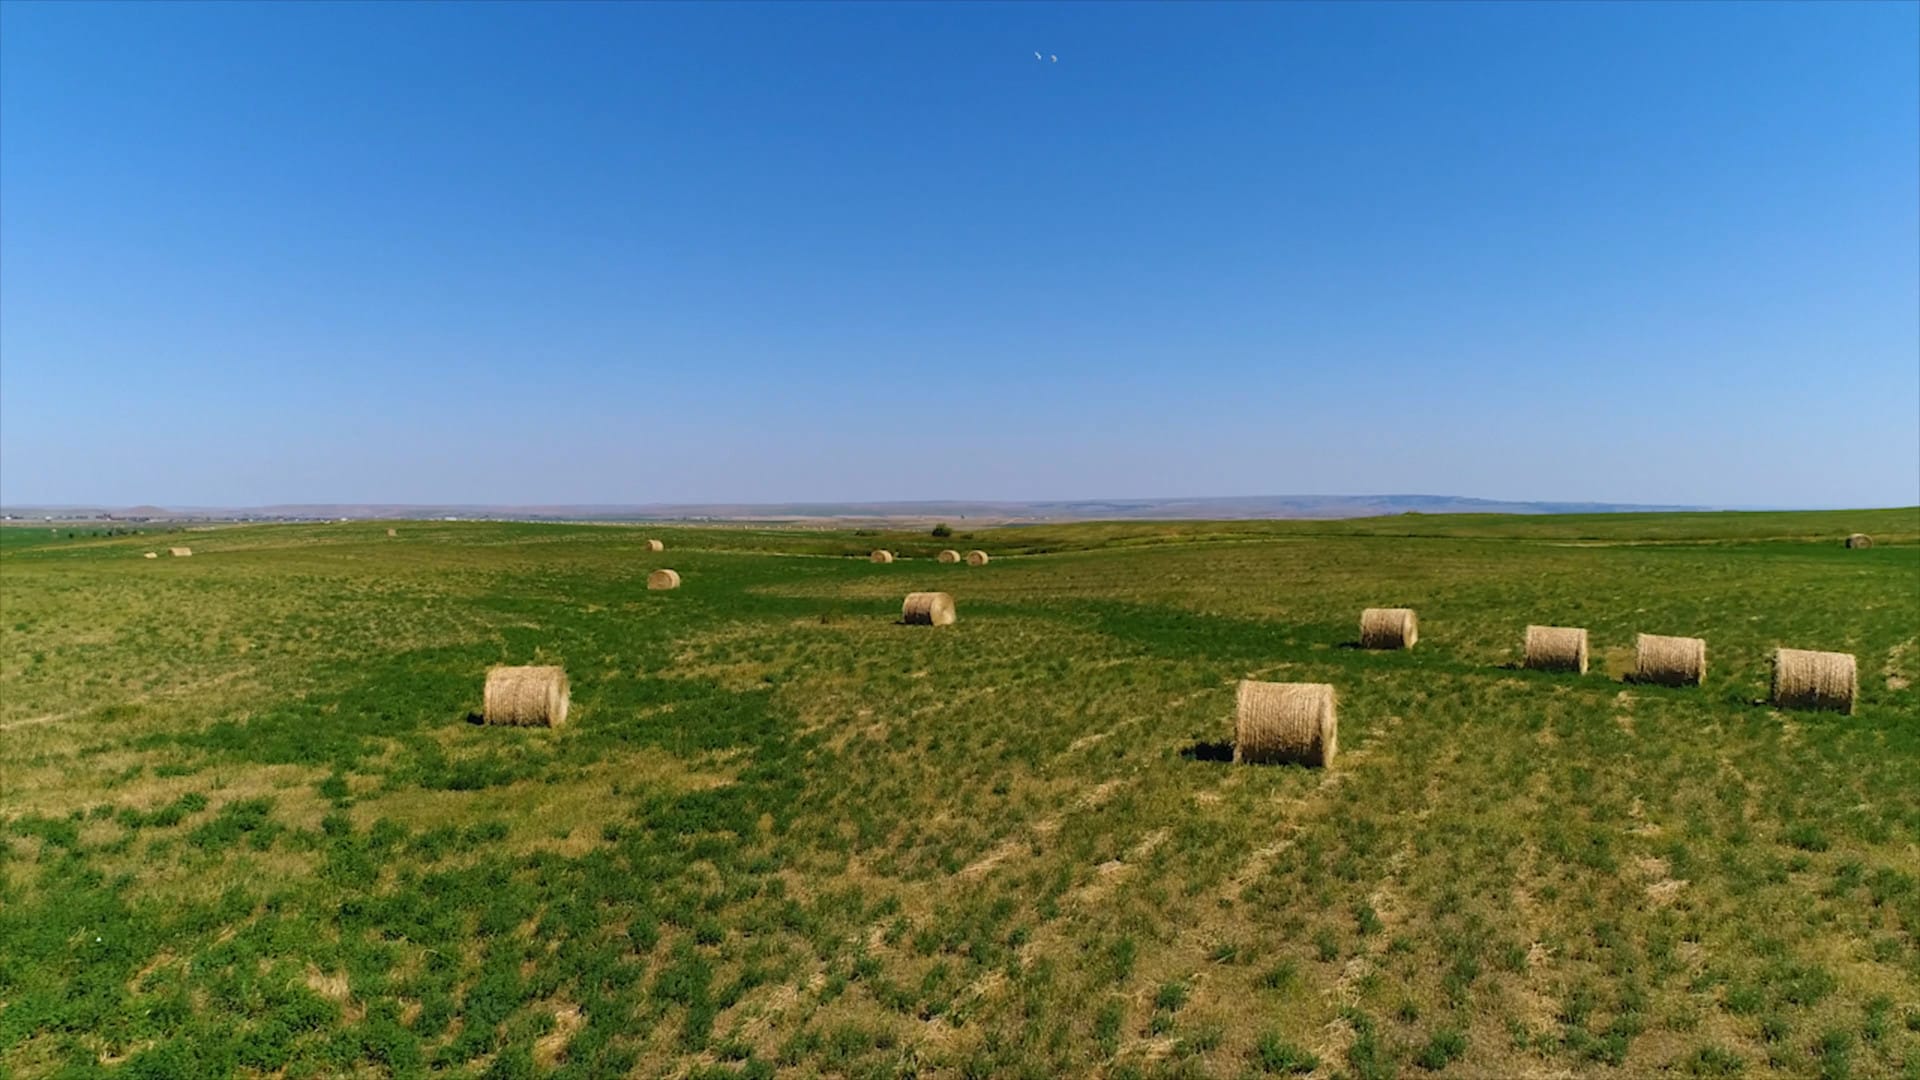 haybales in field rockin 99 ranch roberts montana